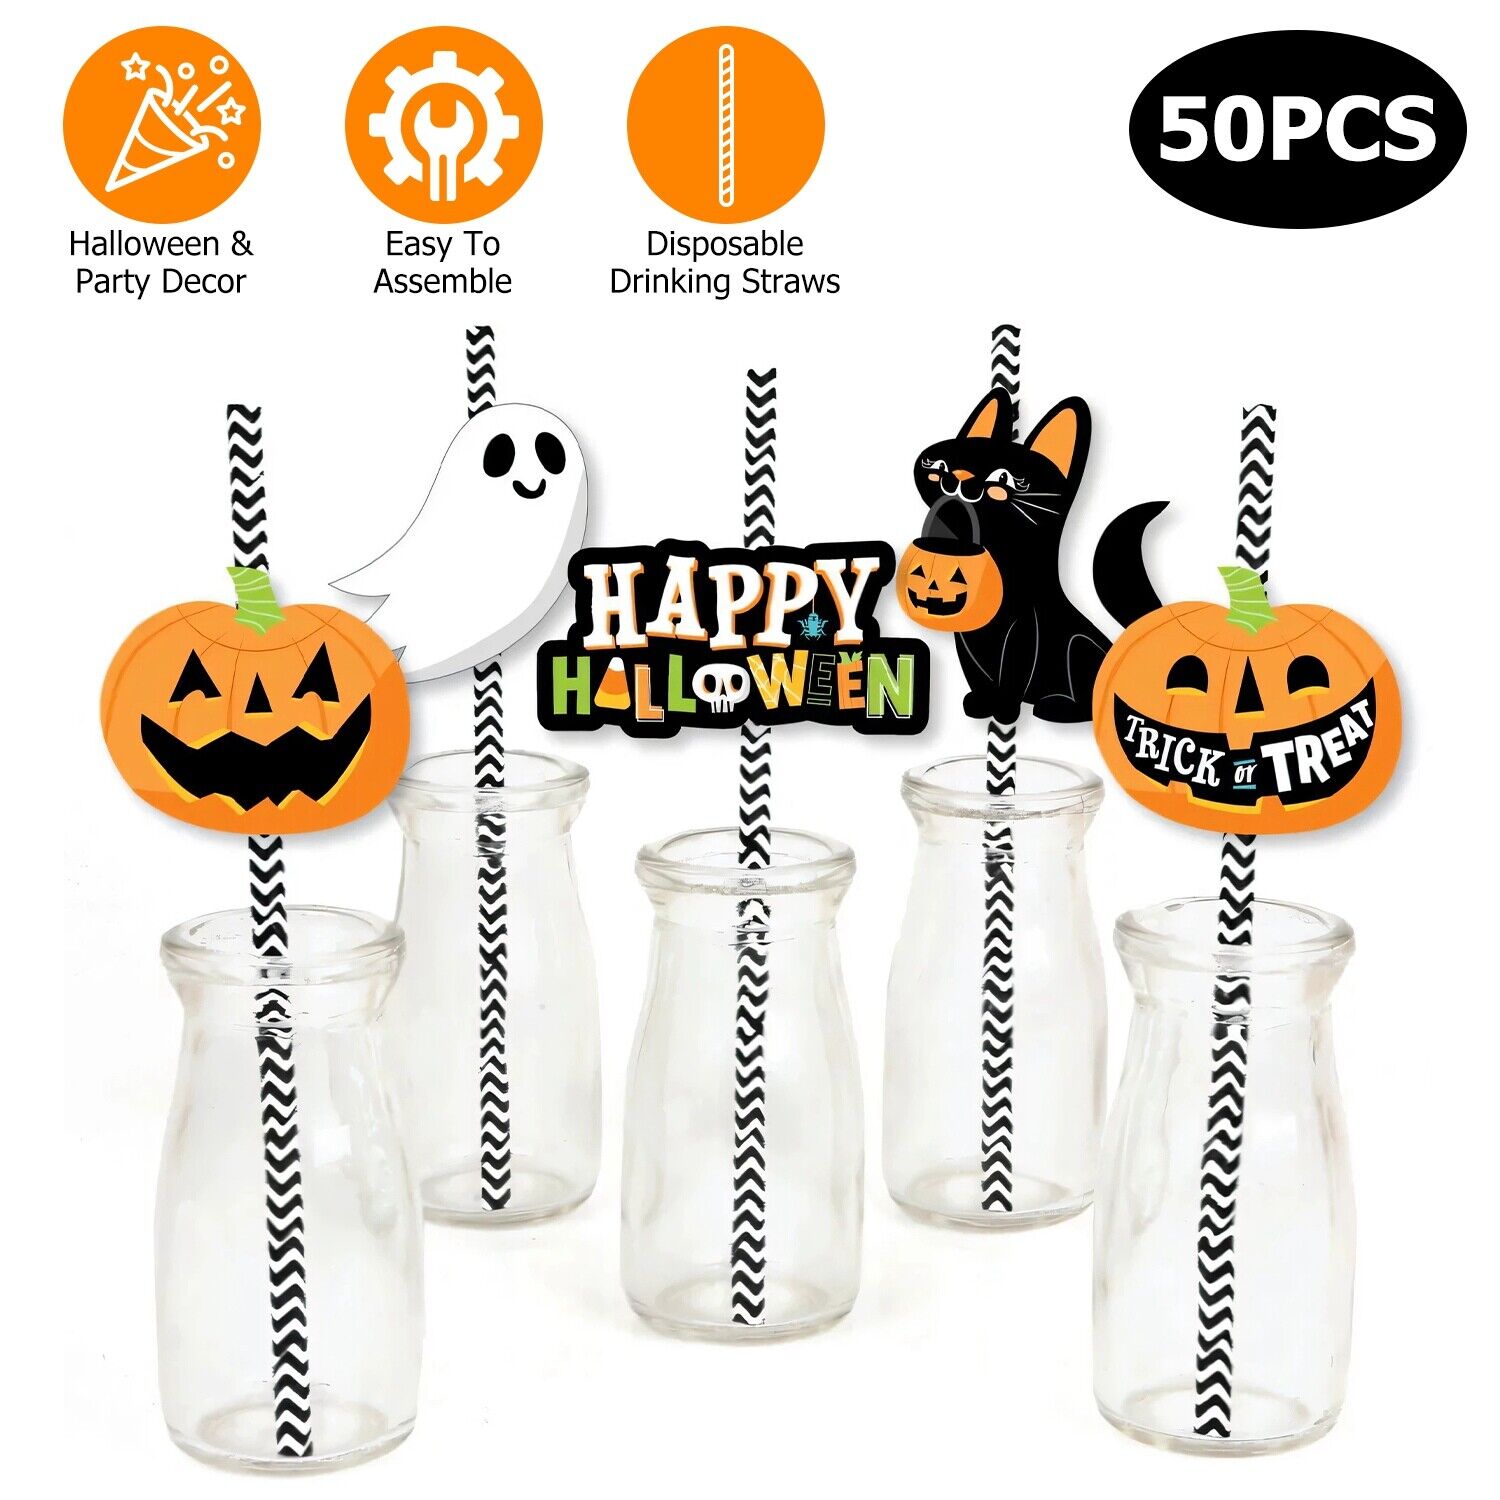 imountek 50Pcs Halloween Party Striped Decorative Straws Disposable Drinking Straws Paper